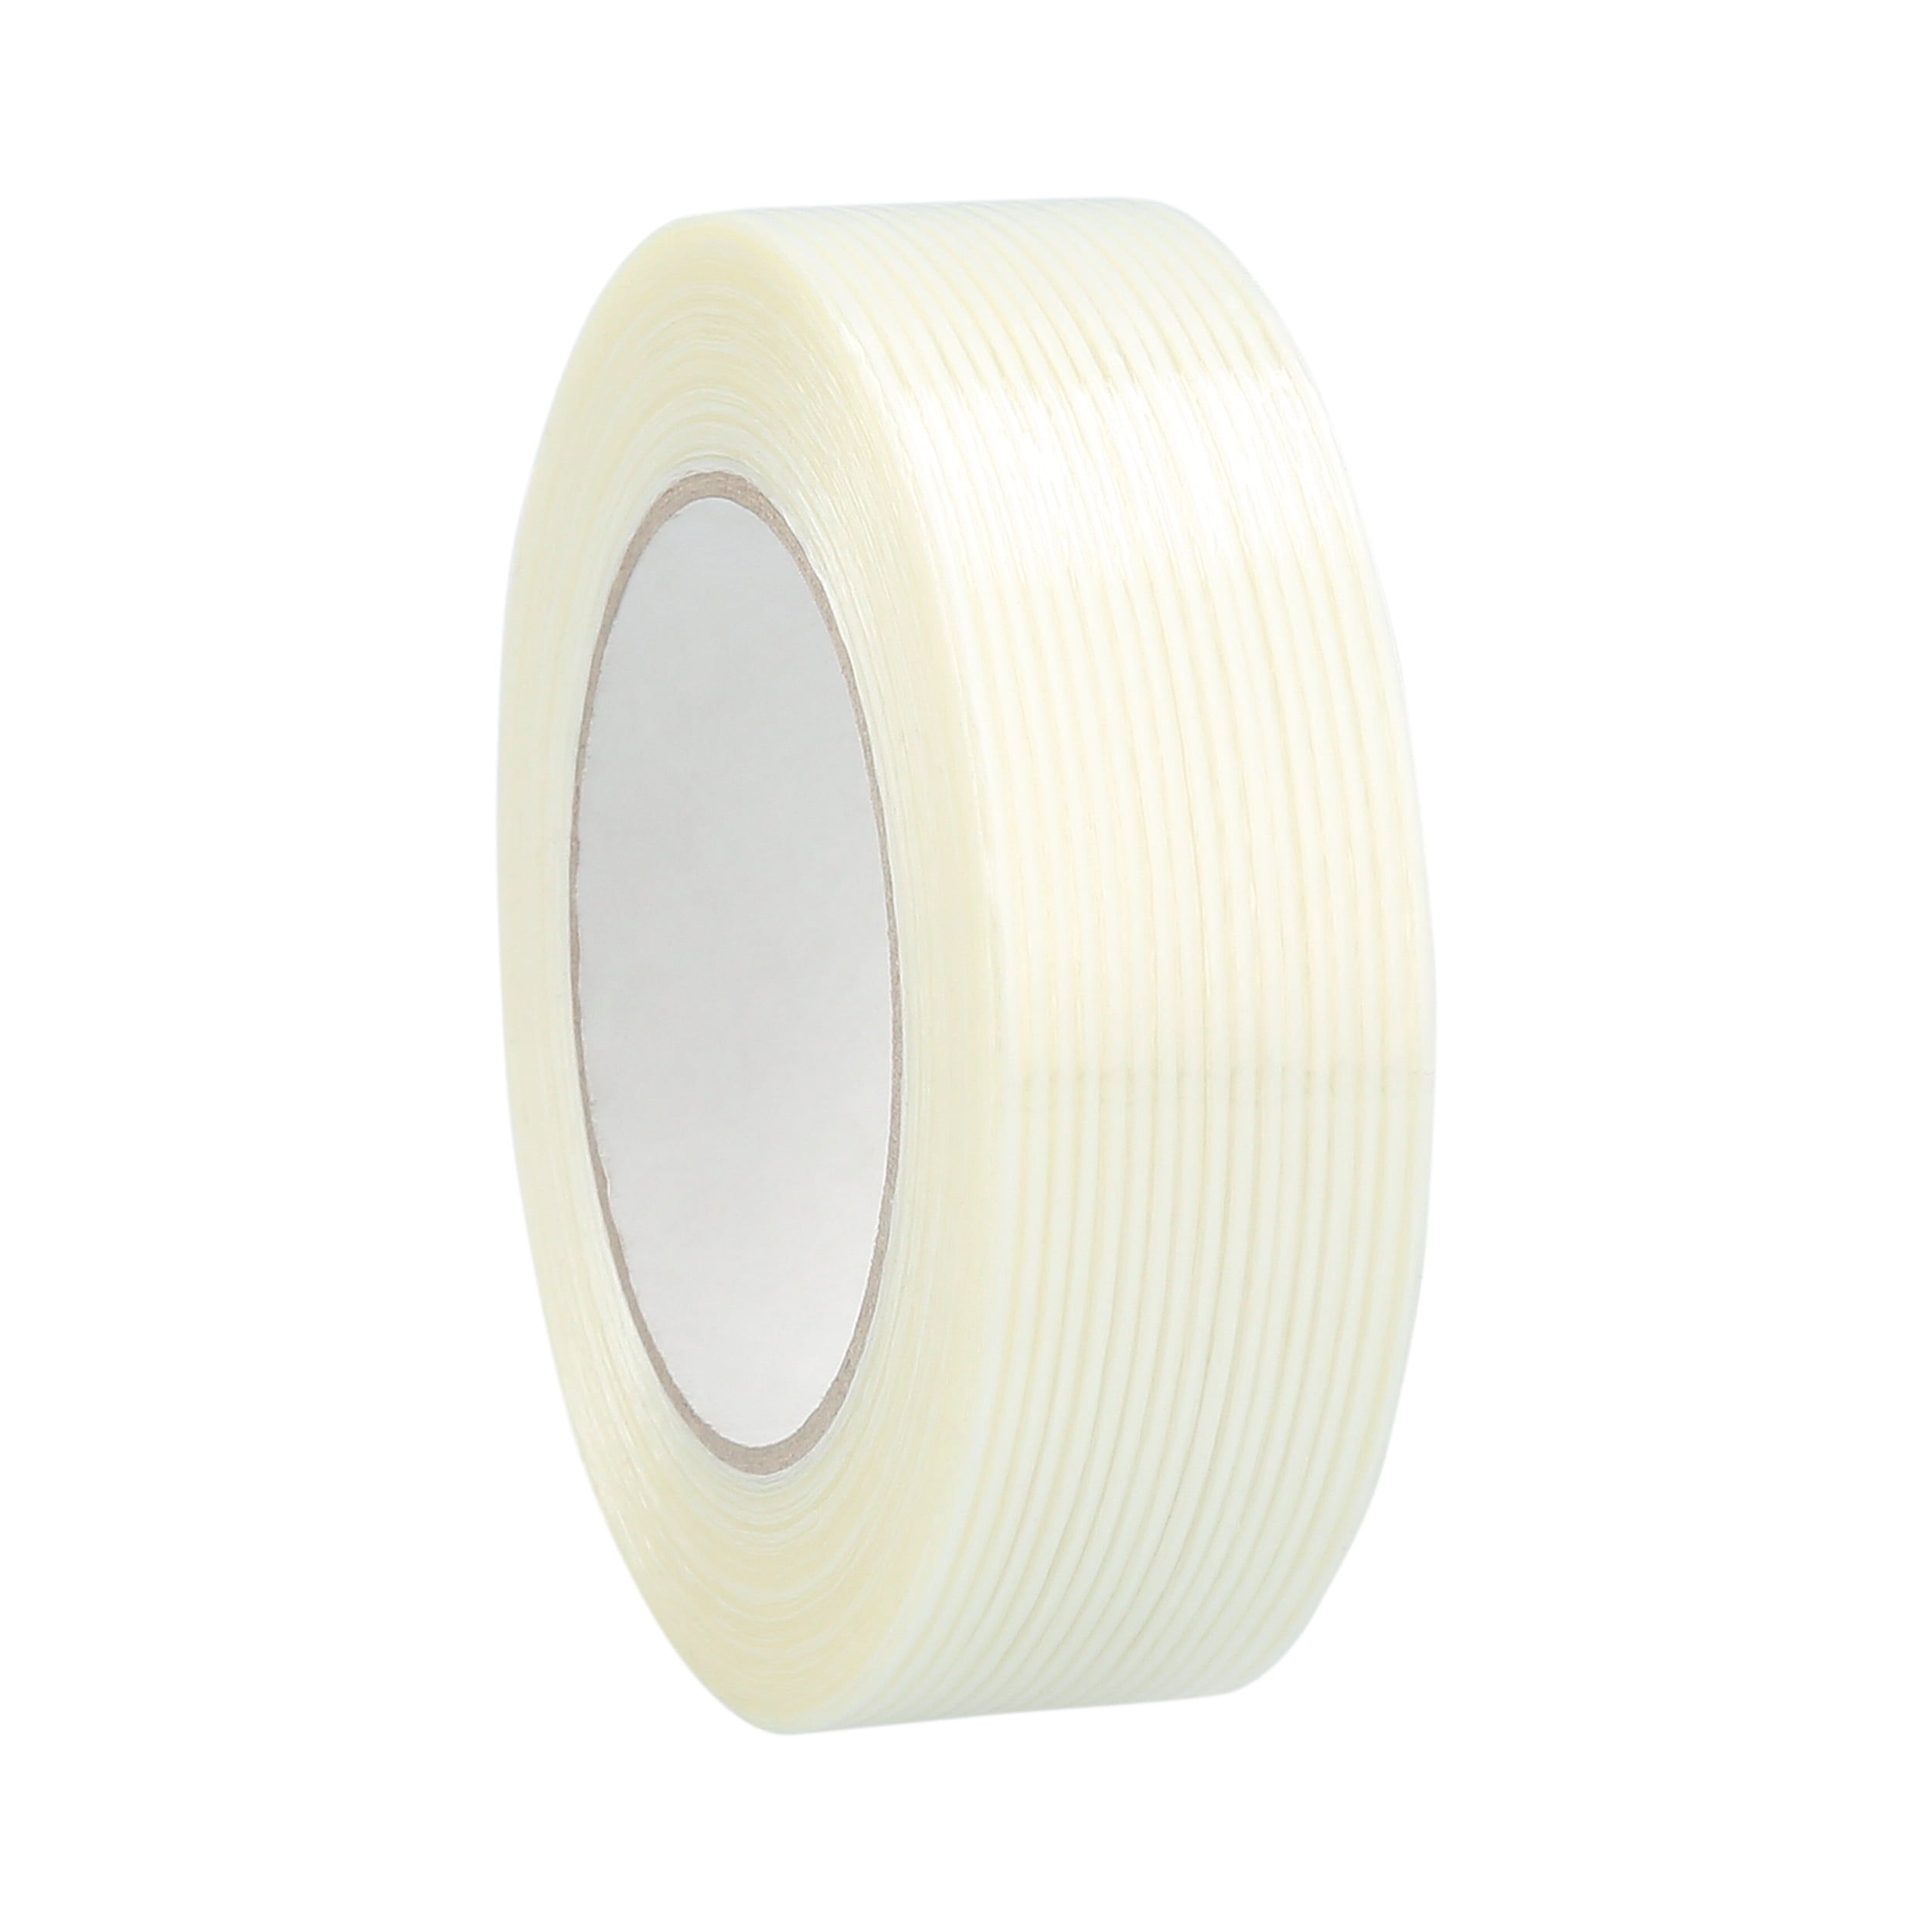 Fiberglass Filament Reinforced Tape 1/2" x 60 FEET Strapping Packaging 